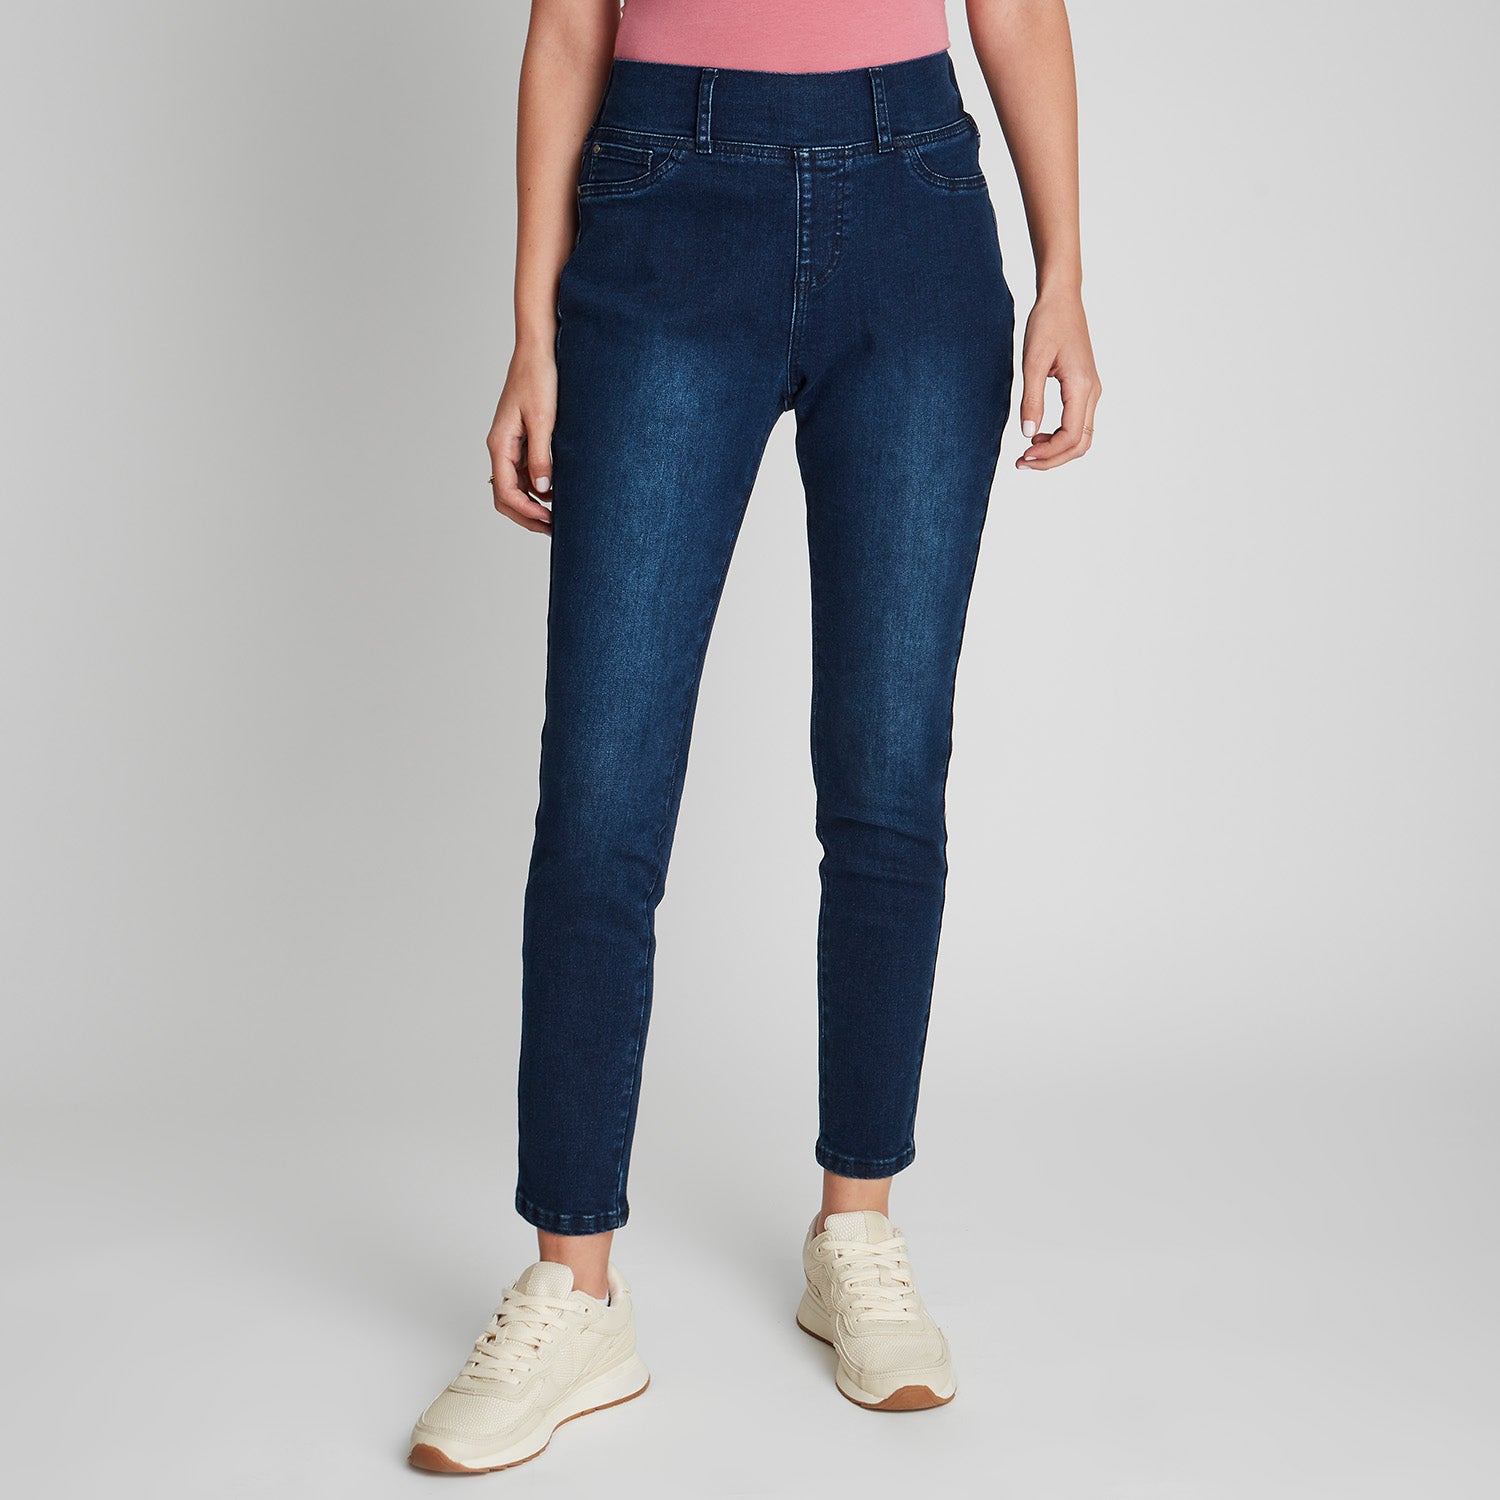 Jeans Calza Con Pretina Alta CURVI